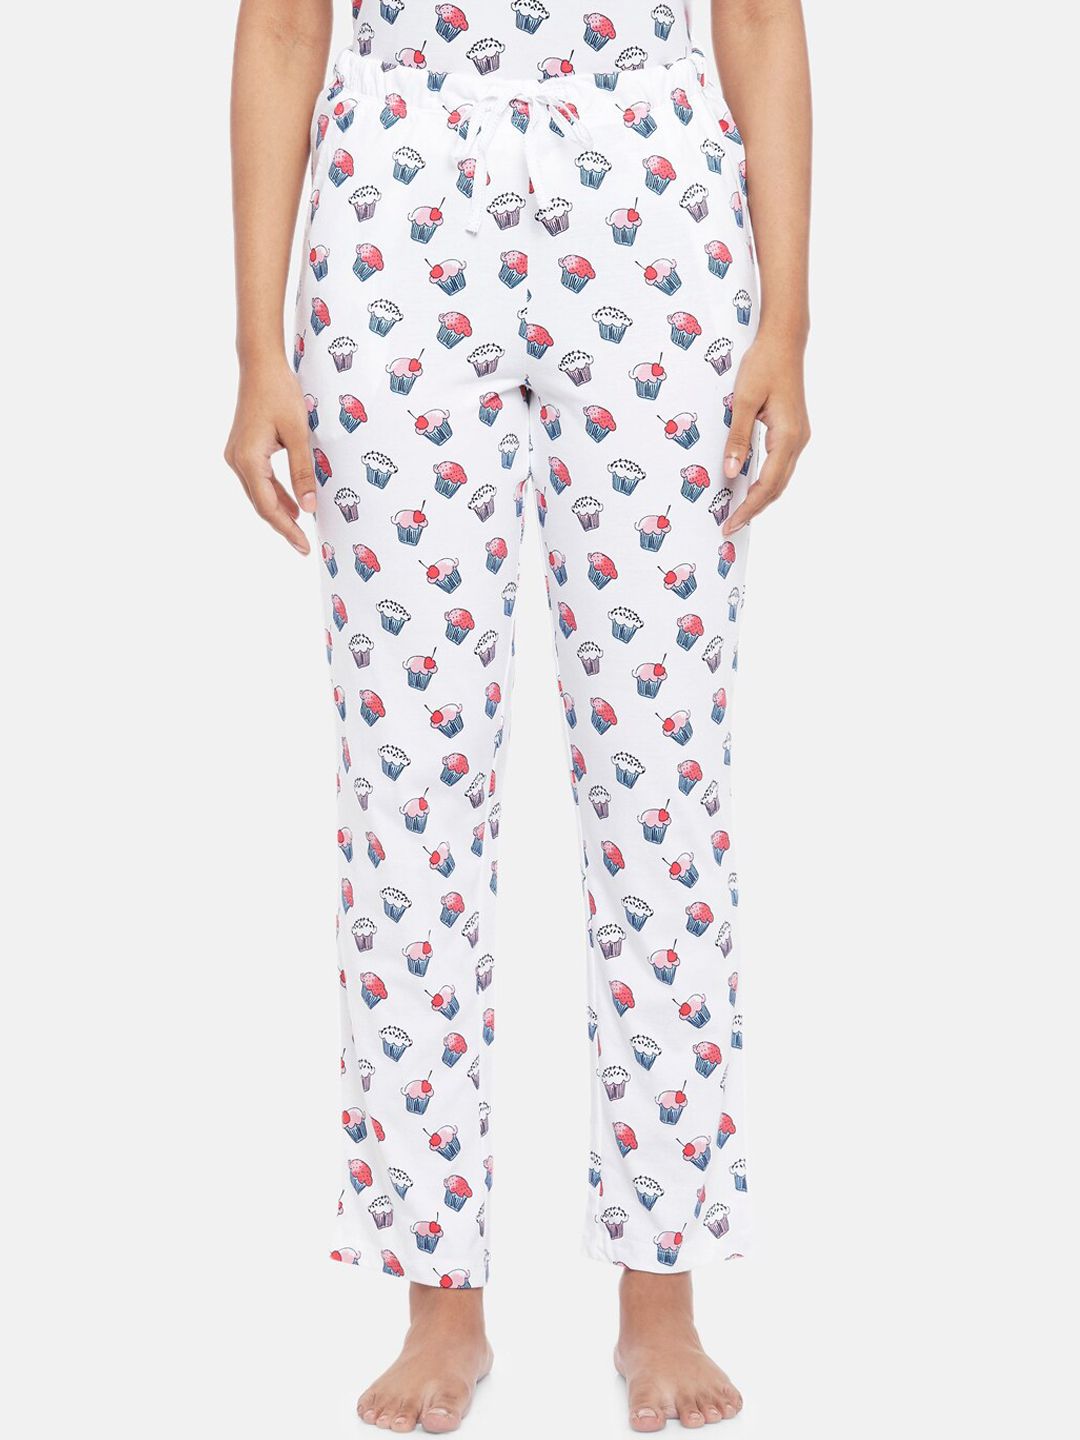 Dreamz by Pantaloons Women White & Pink Printed Night Suit Set Price in India